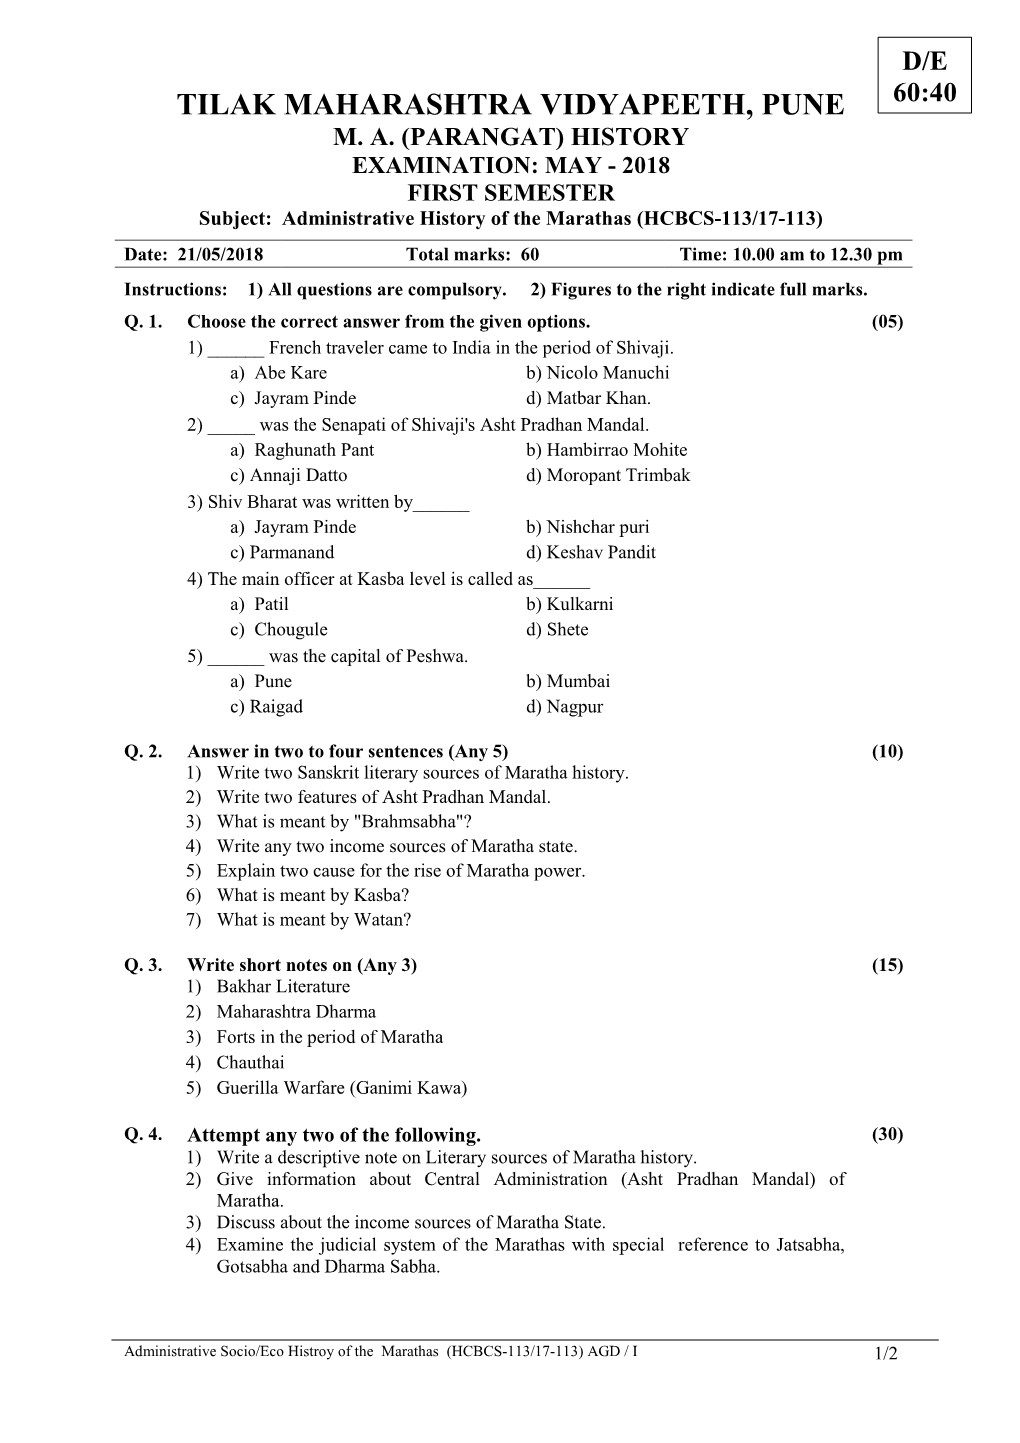 HCBCS 113 Administrative Histroy of Maratha